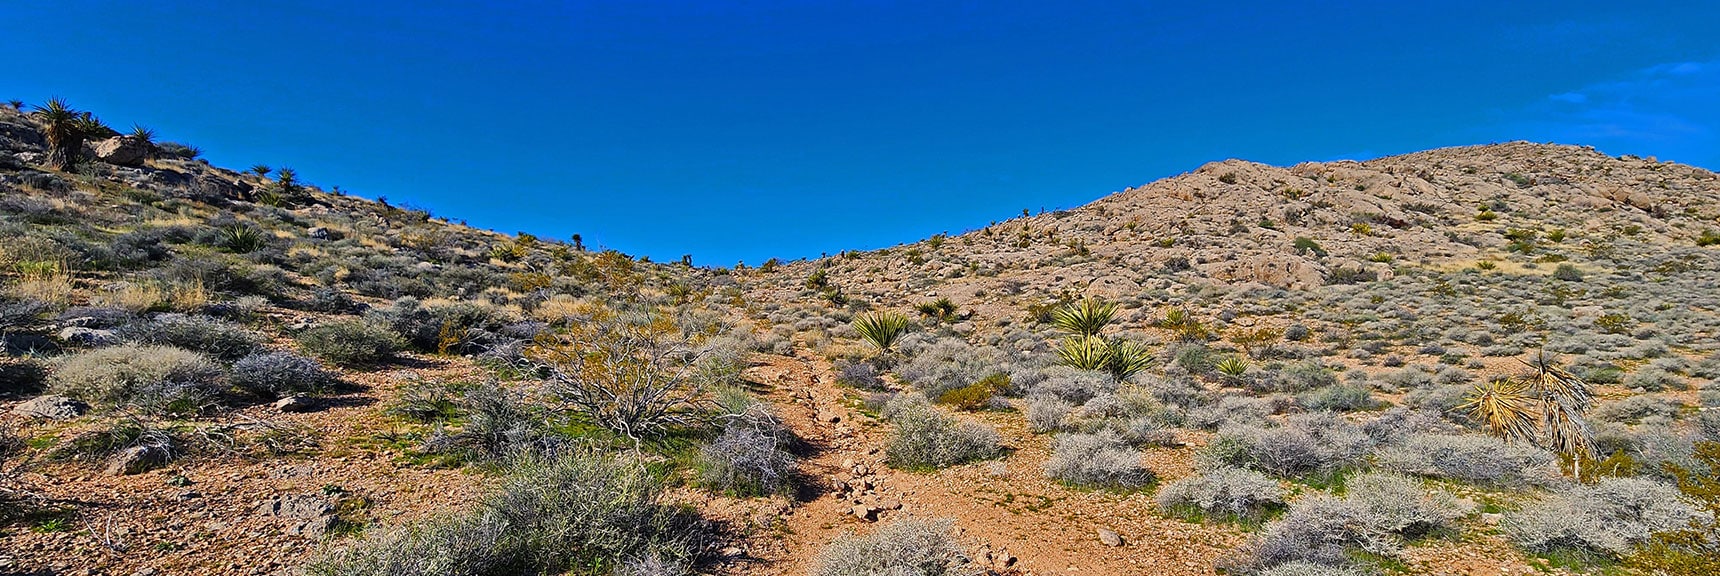 Ascend to Lower Gray Cap Ridge Saddle. | Gray Cap Ridge / Brownstone Basin Loop | La Madre Mountains Wilderness, Nevada